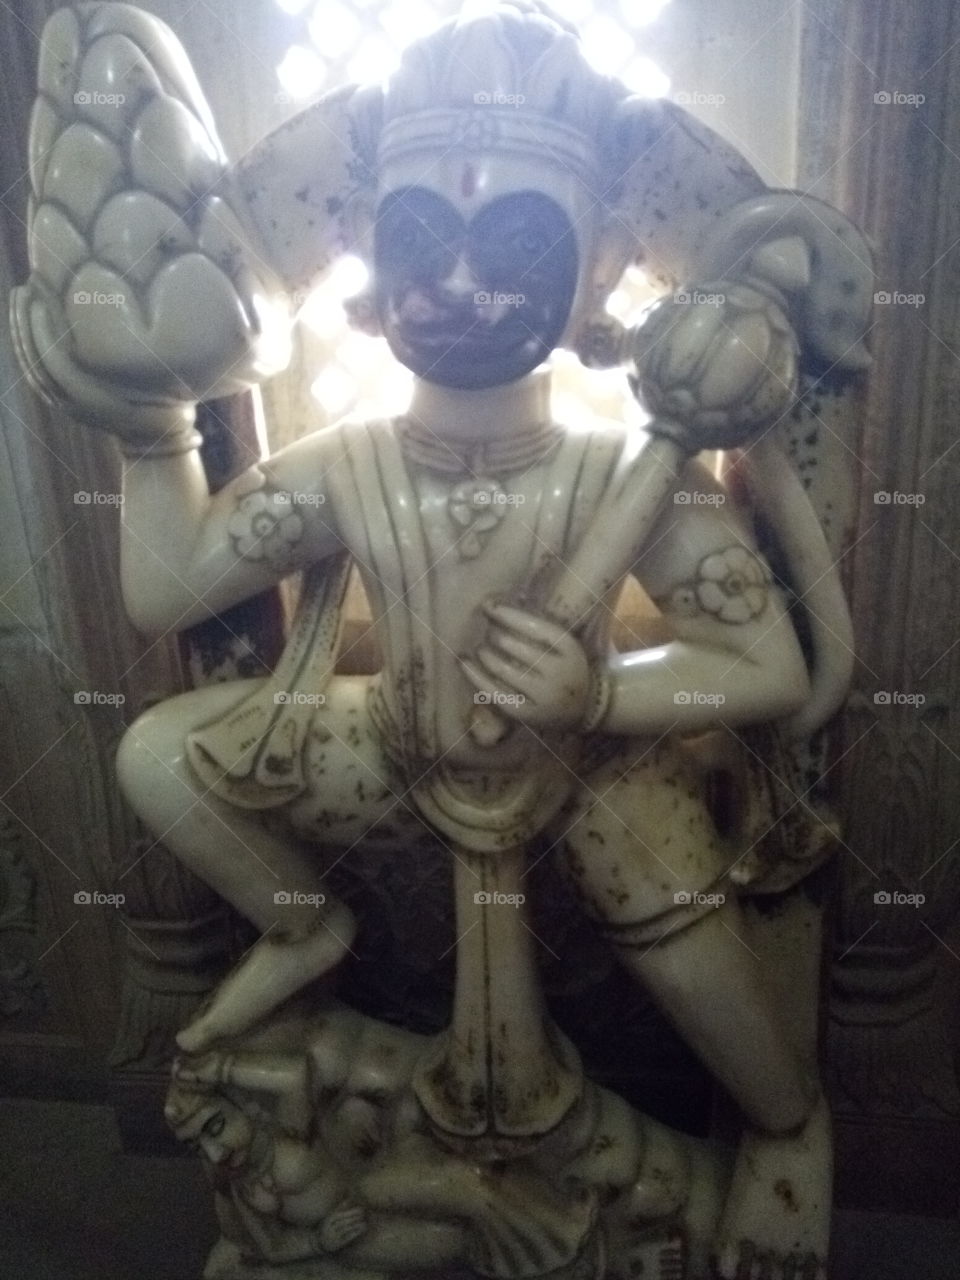 Gr8 God of hindu religion known as hanuman